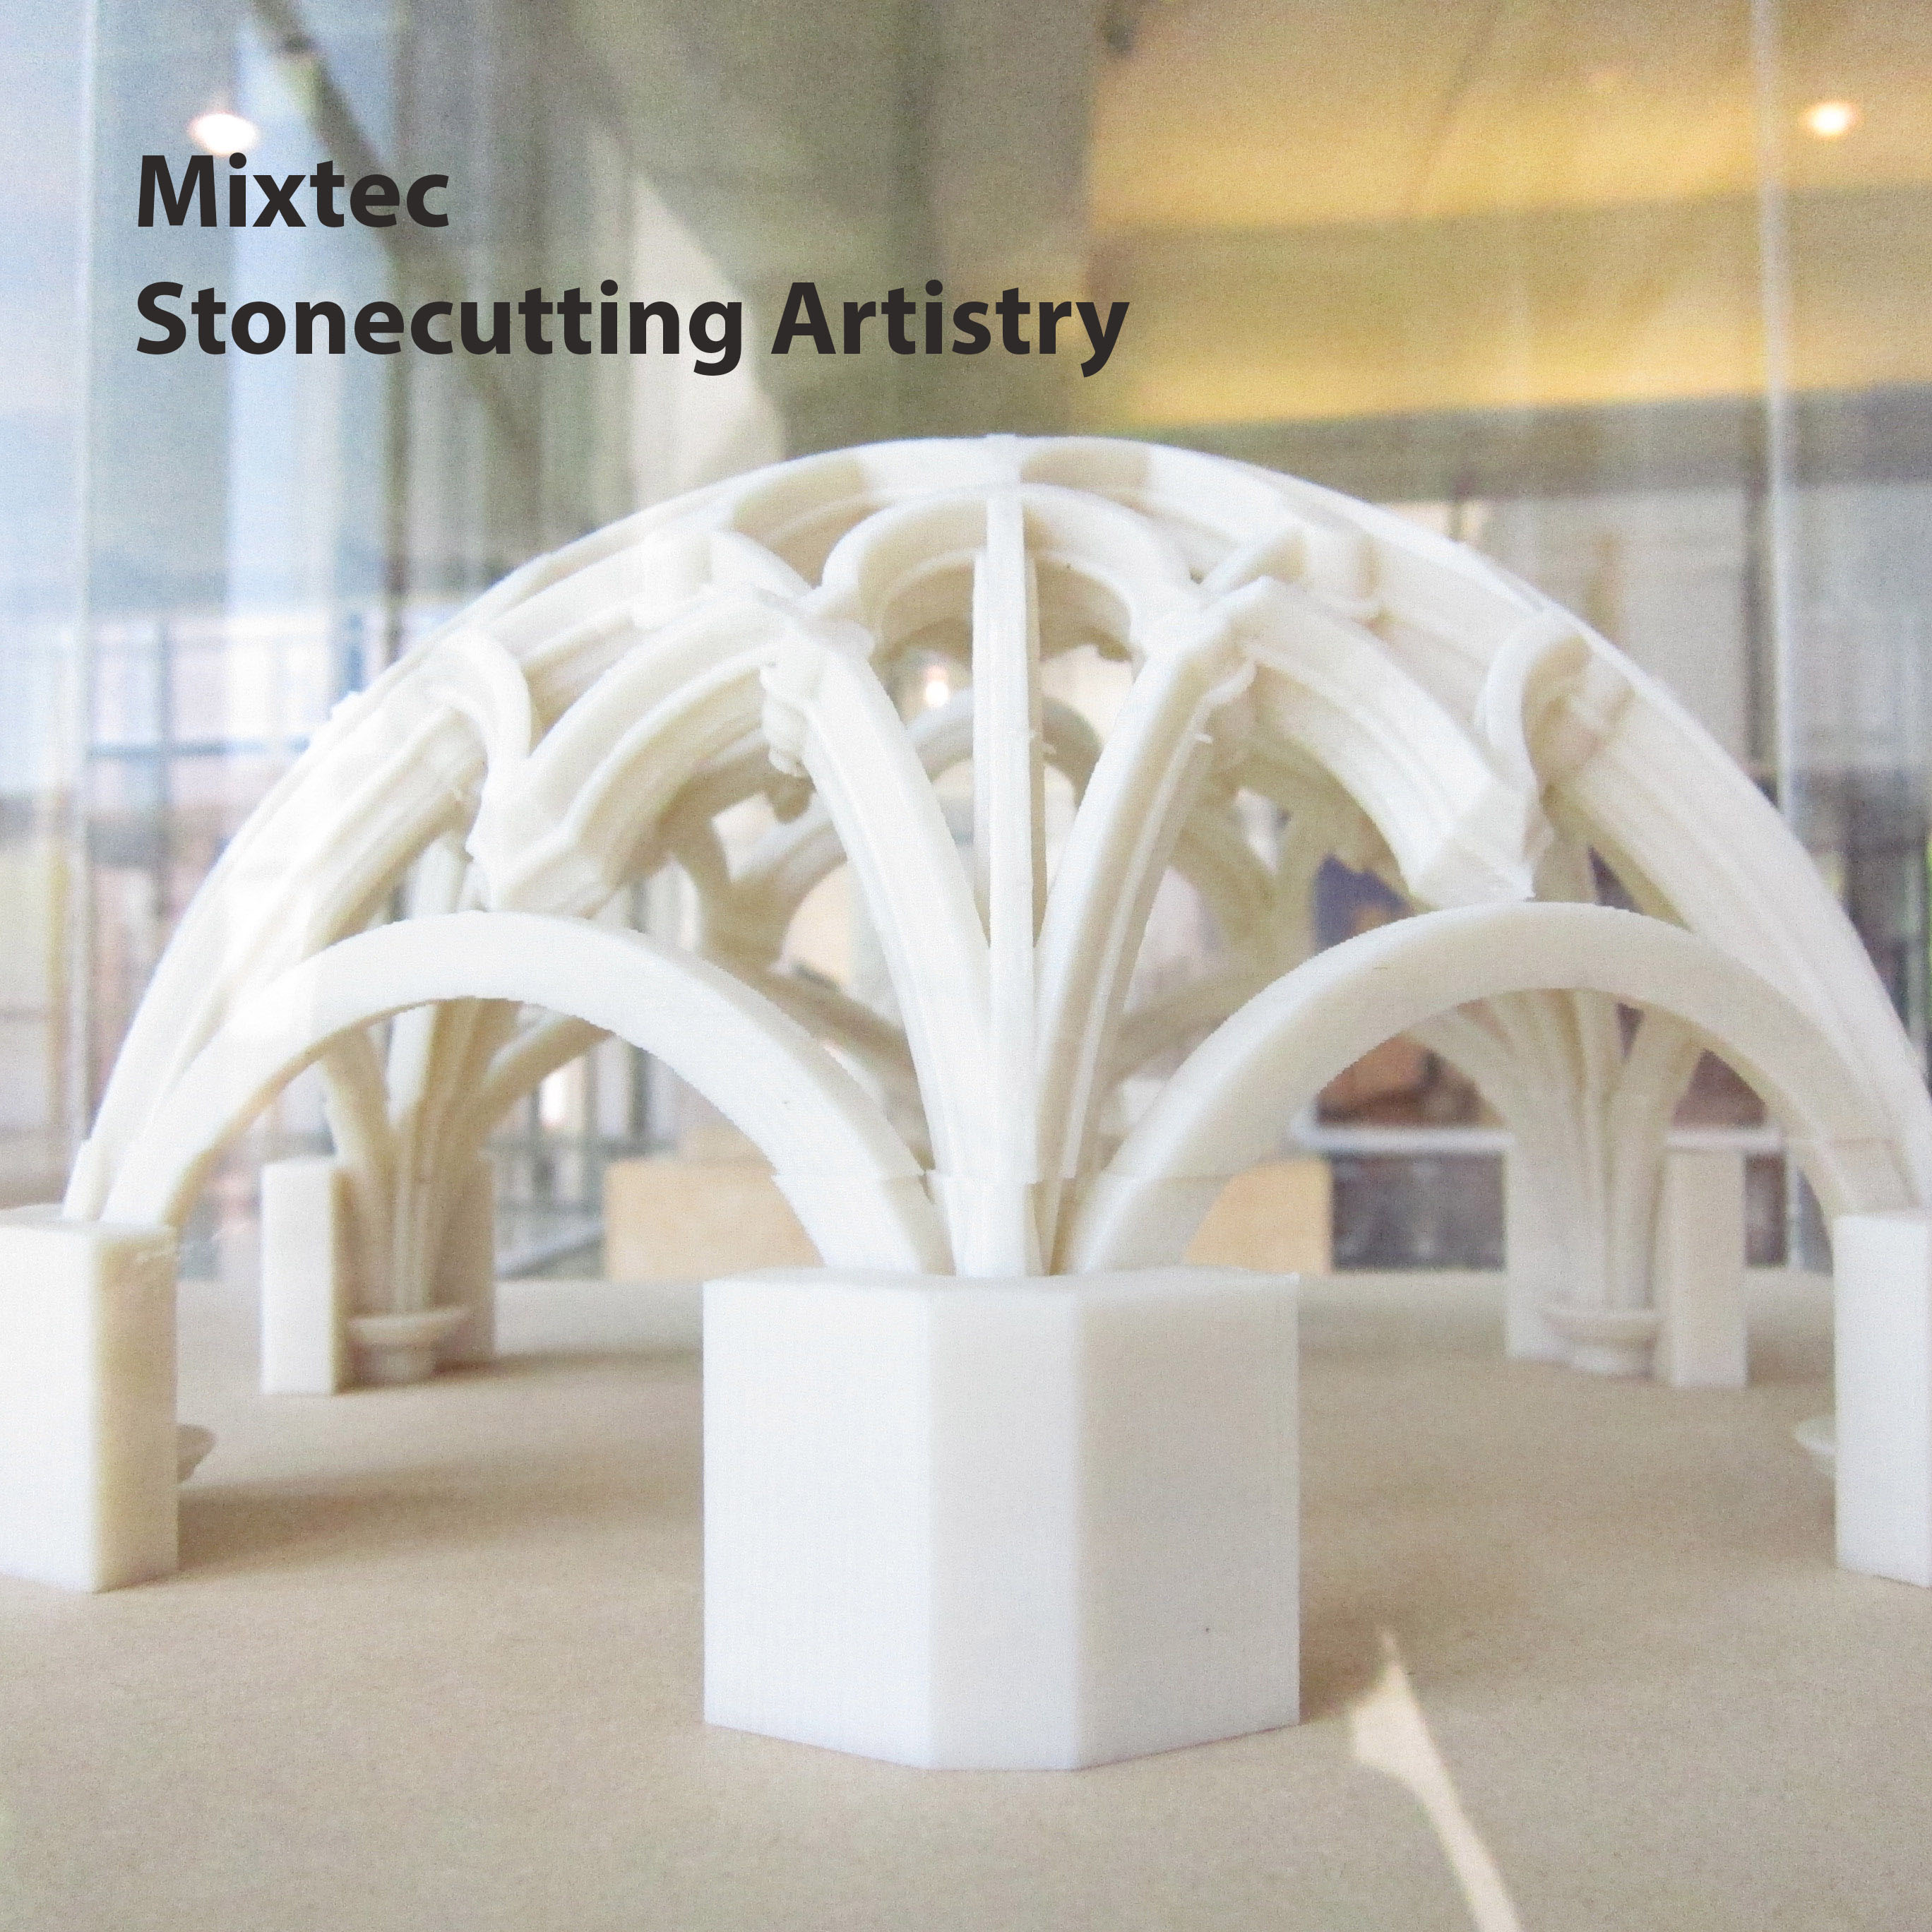 Mixtec stonecutting artistry